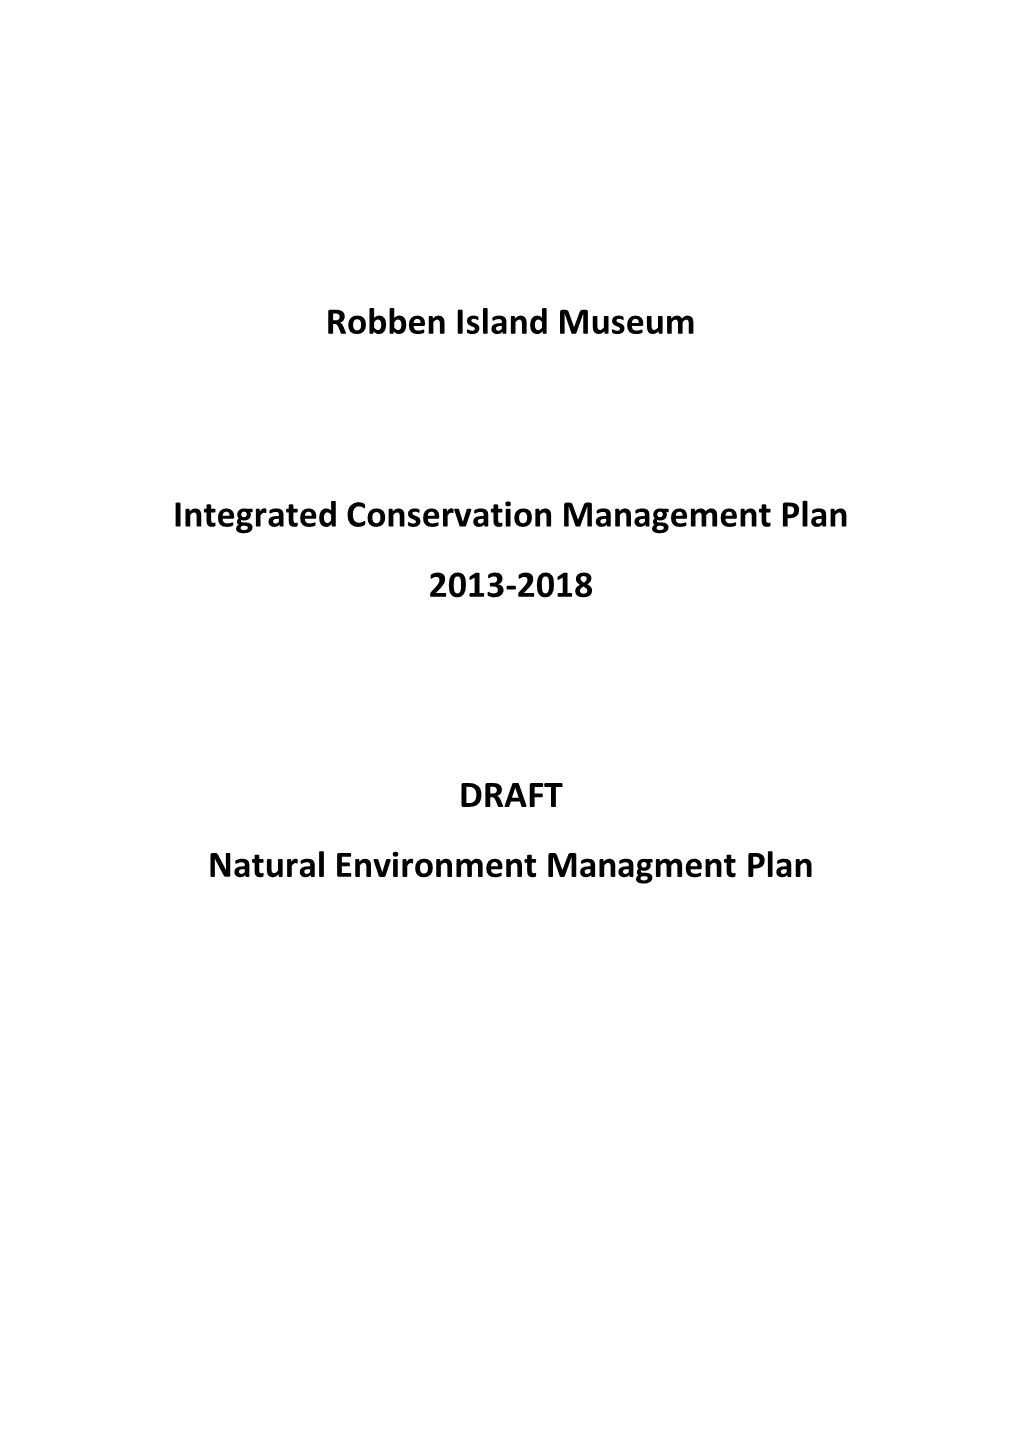 Robben Island Museum Integrated Conservation Management Plan 2013-2018 DRAFT Natural Environment Managment Plan